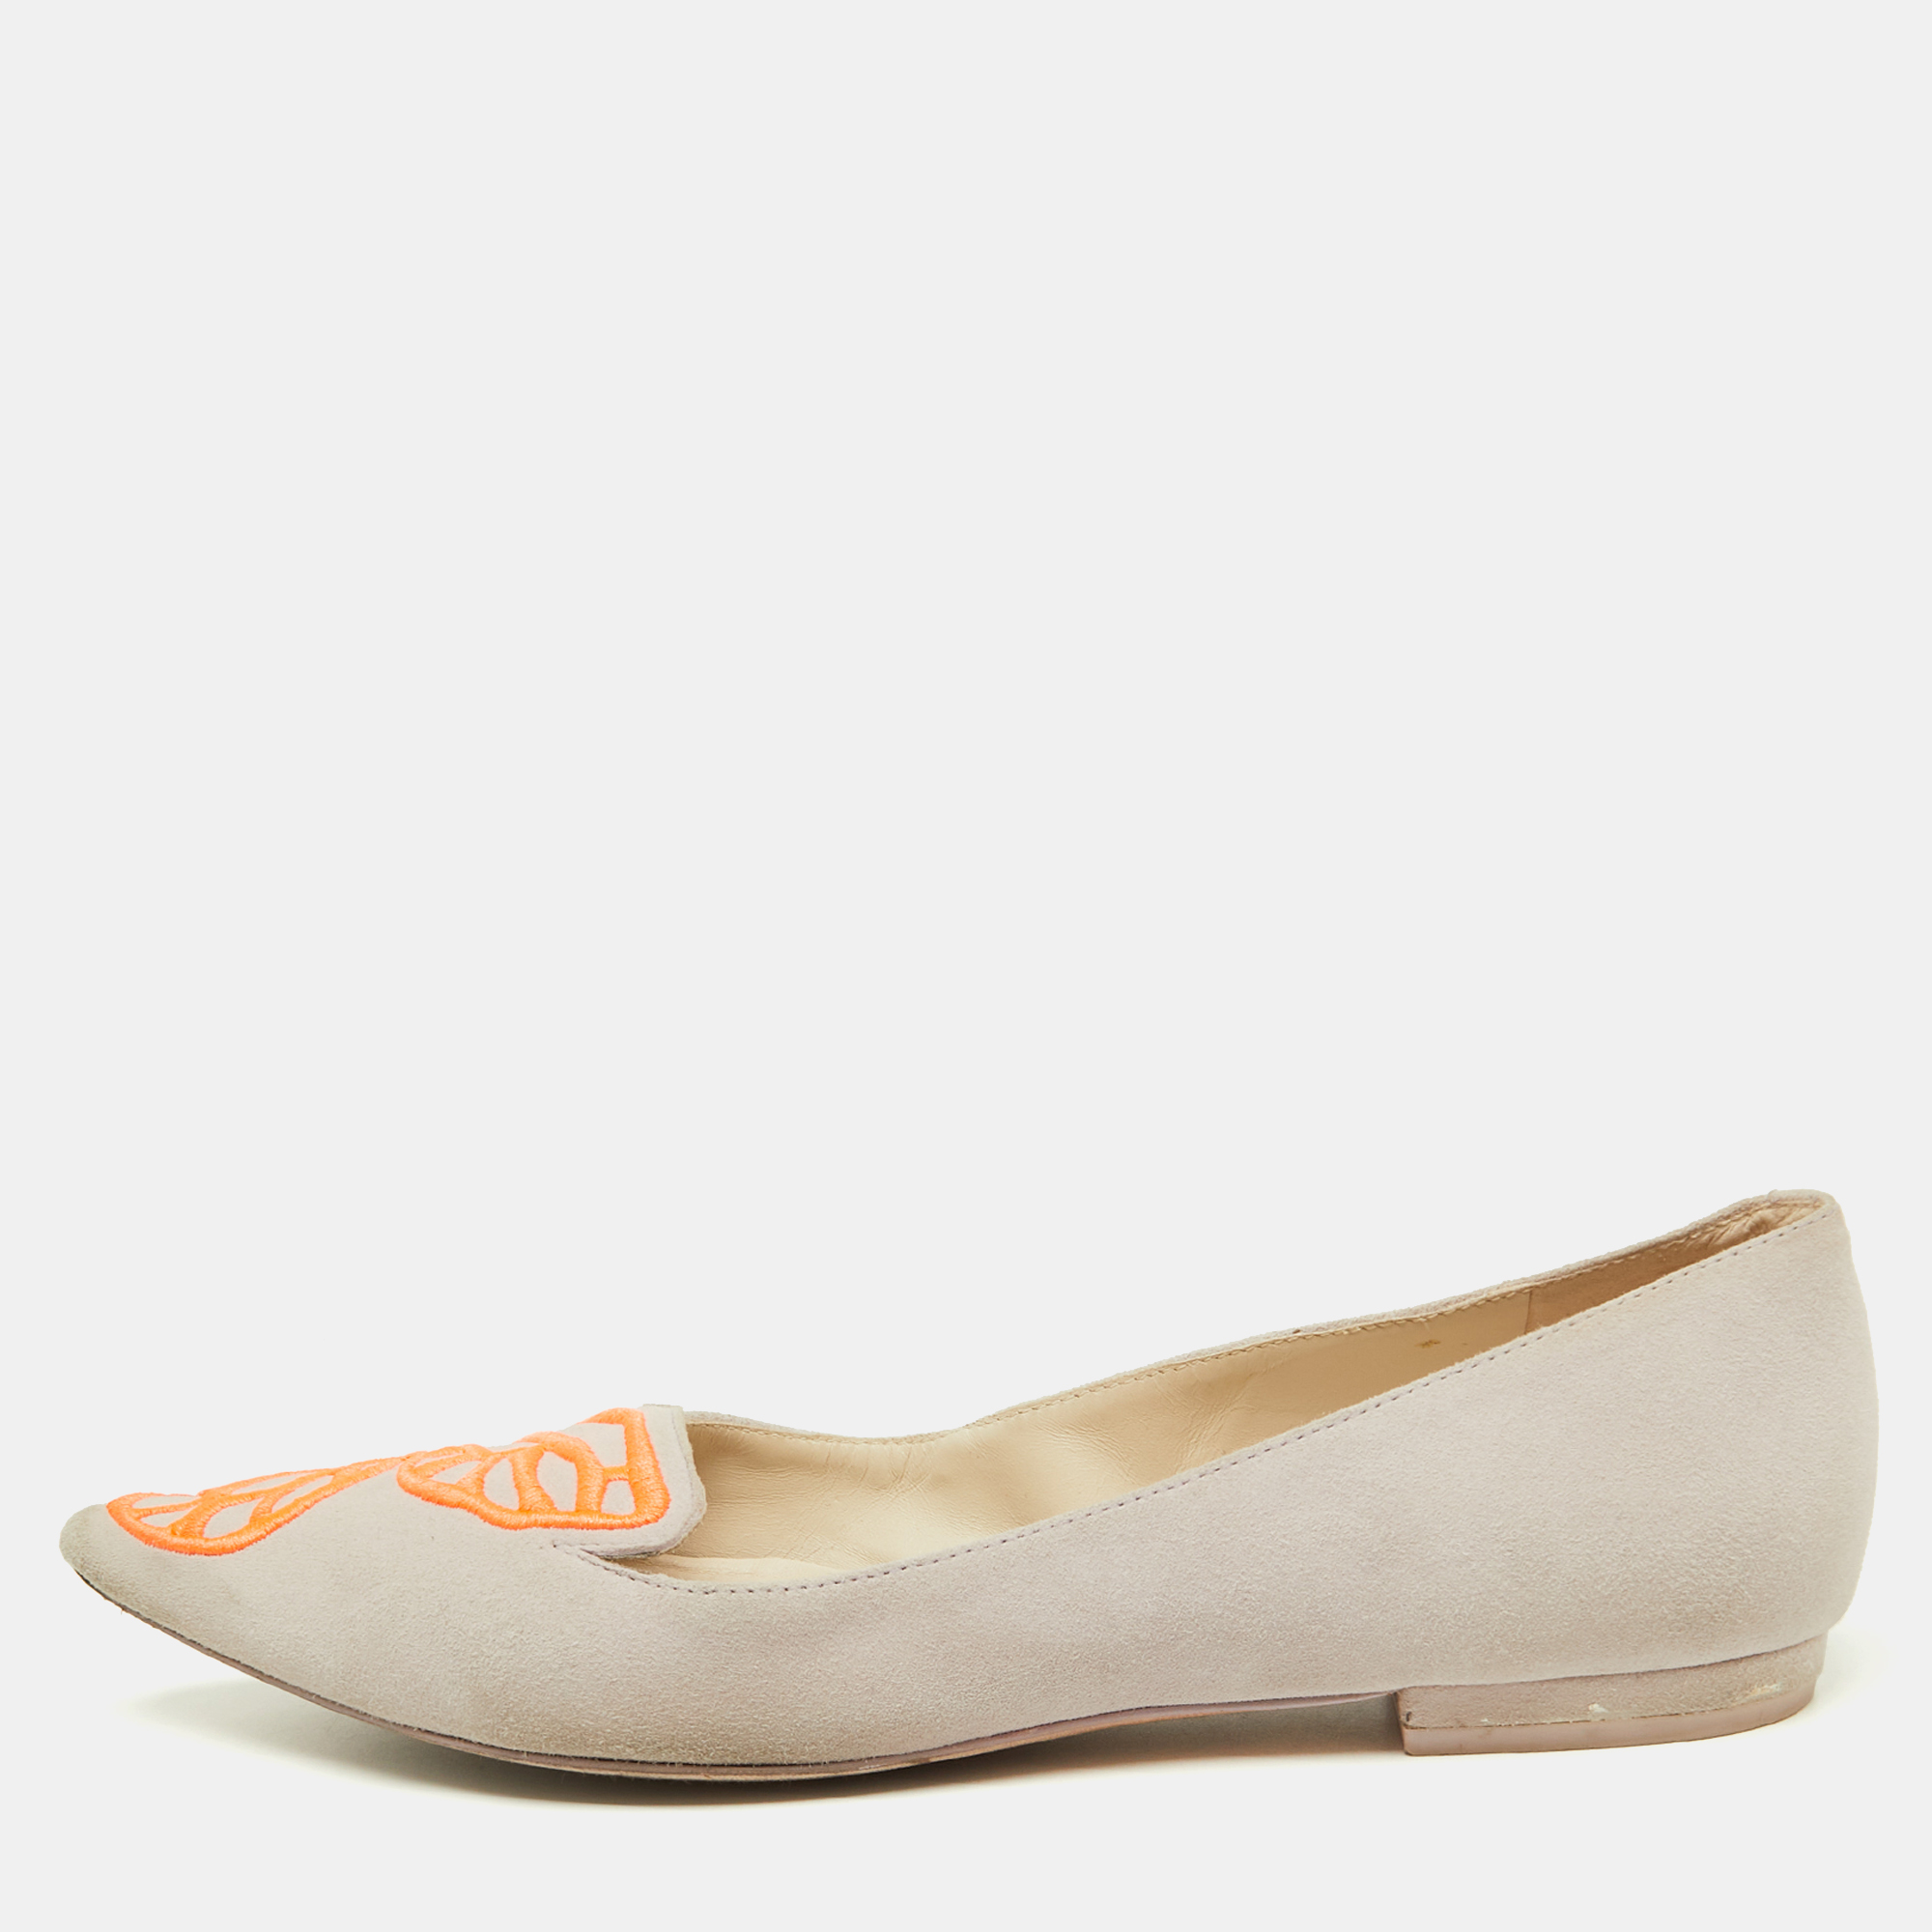 

Sophia Webster Pink/Orange Suede Bibi Butterfly Pointed Toe Ballet Flats Size